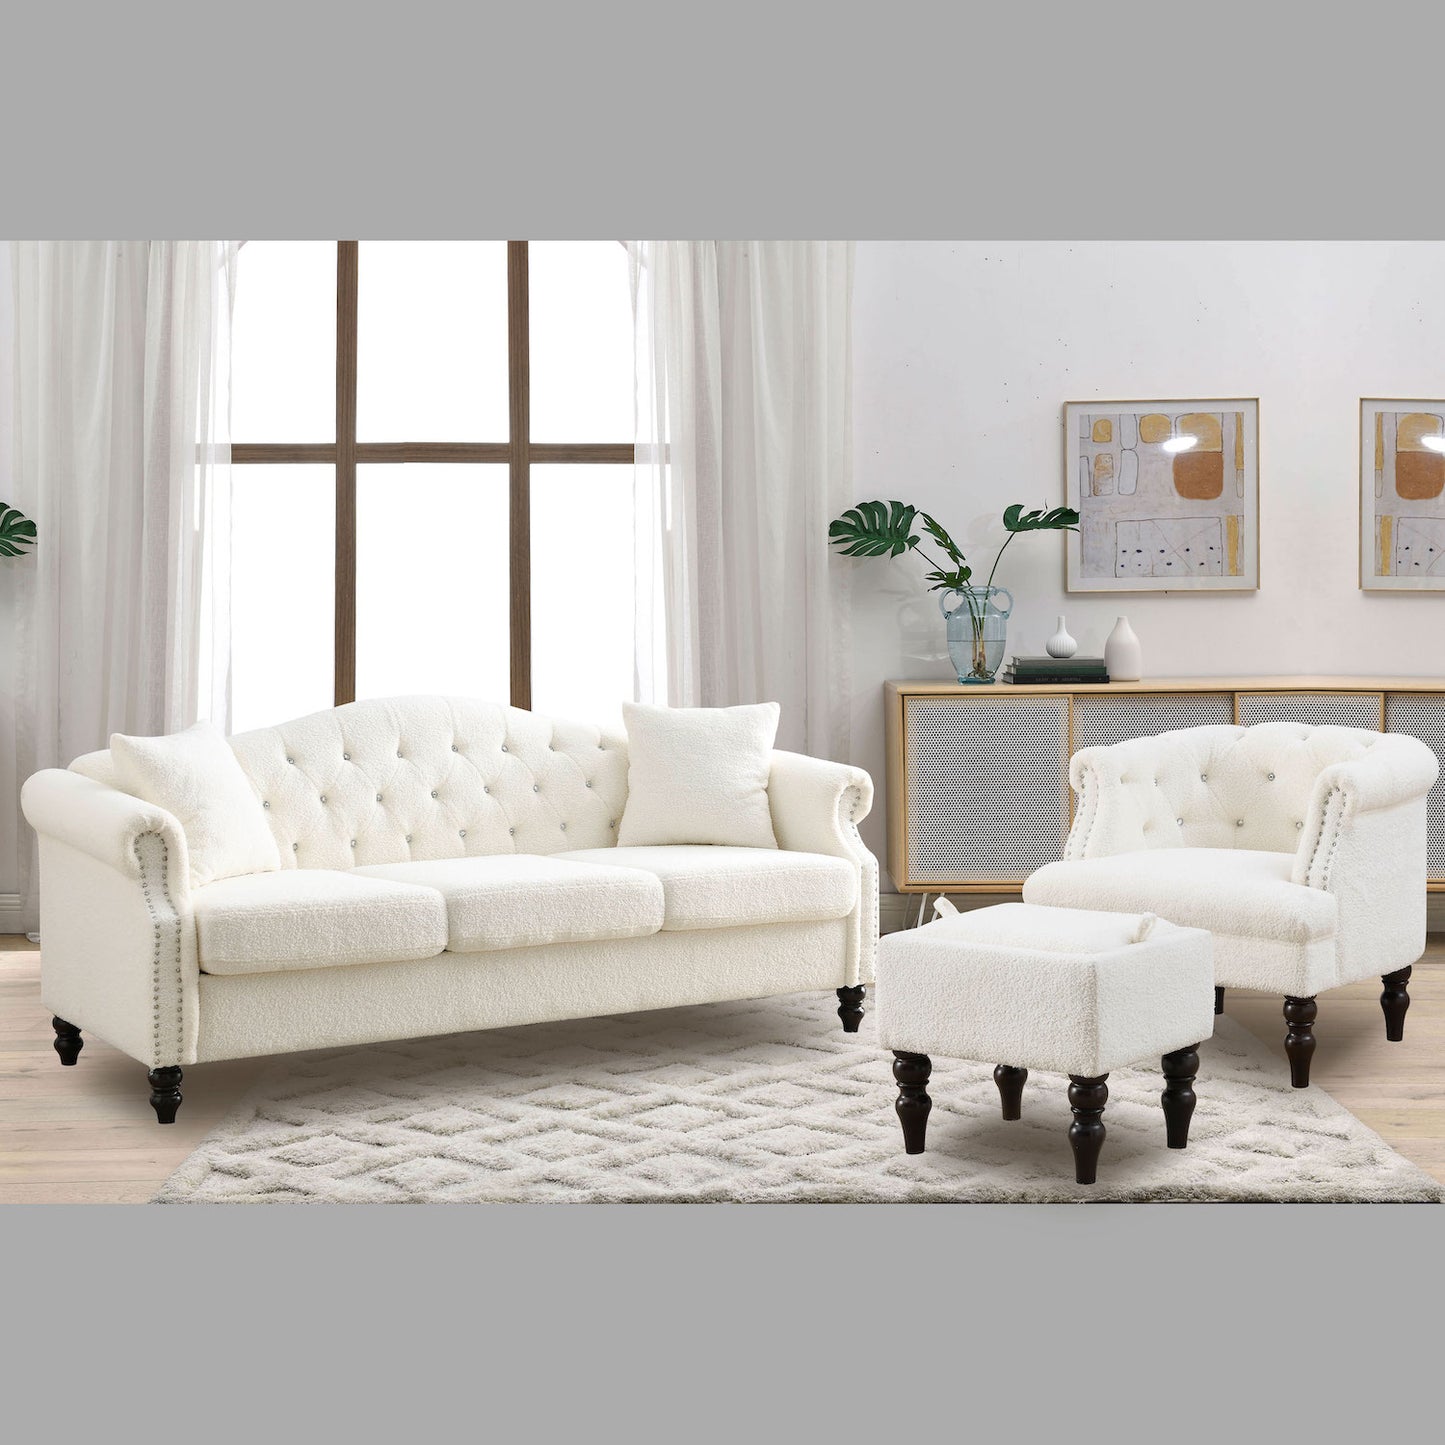 79" Chesterfield Sofa in Plush White Teddy Fabric